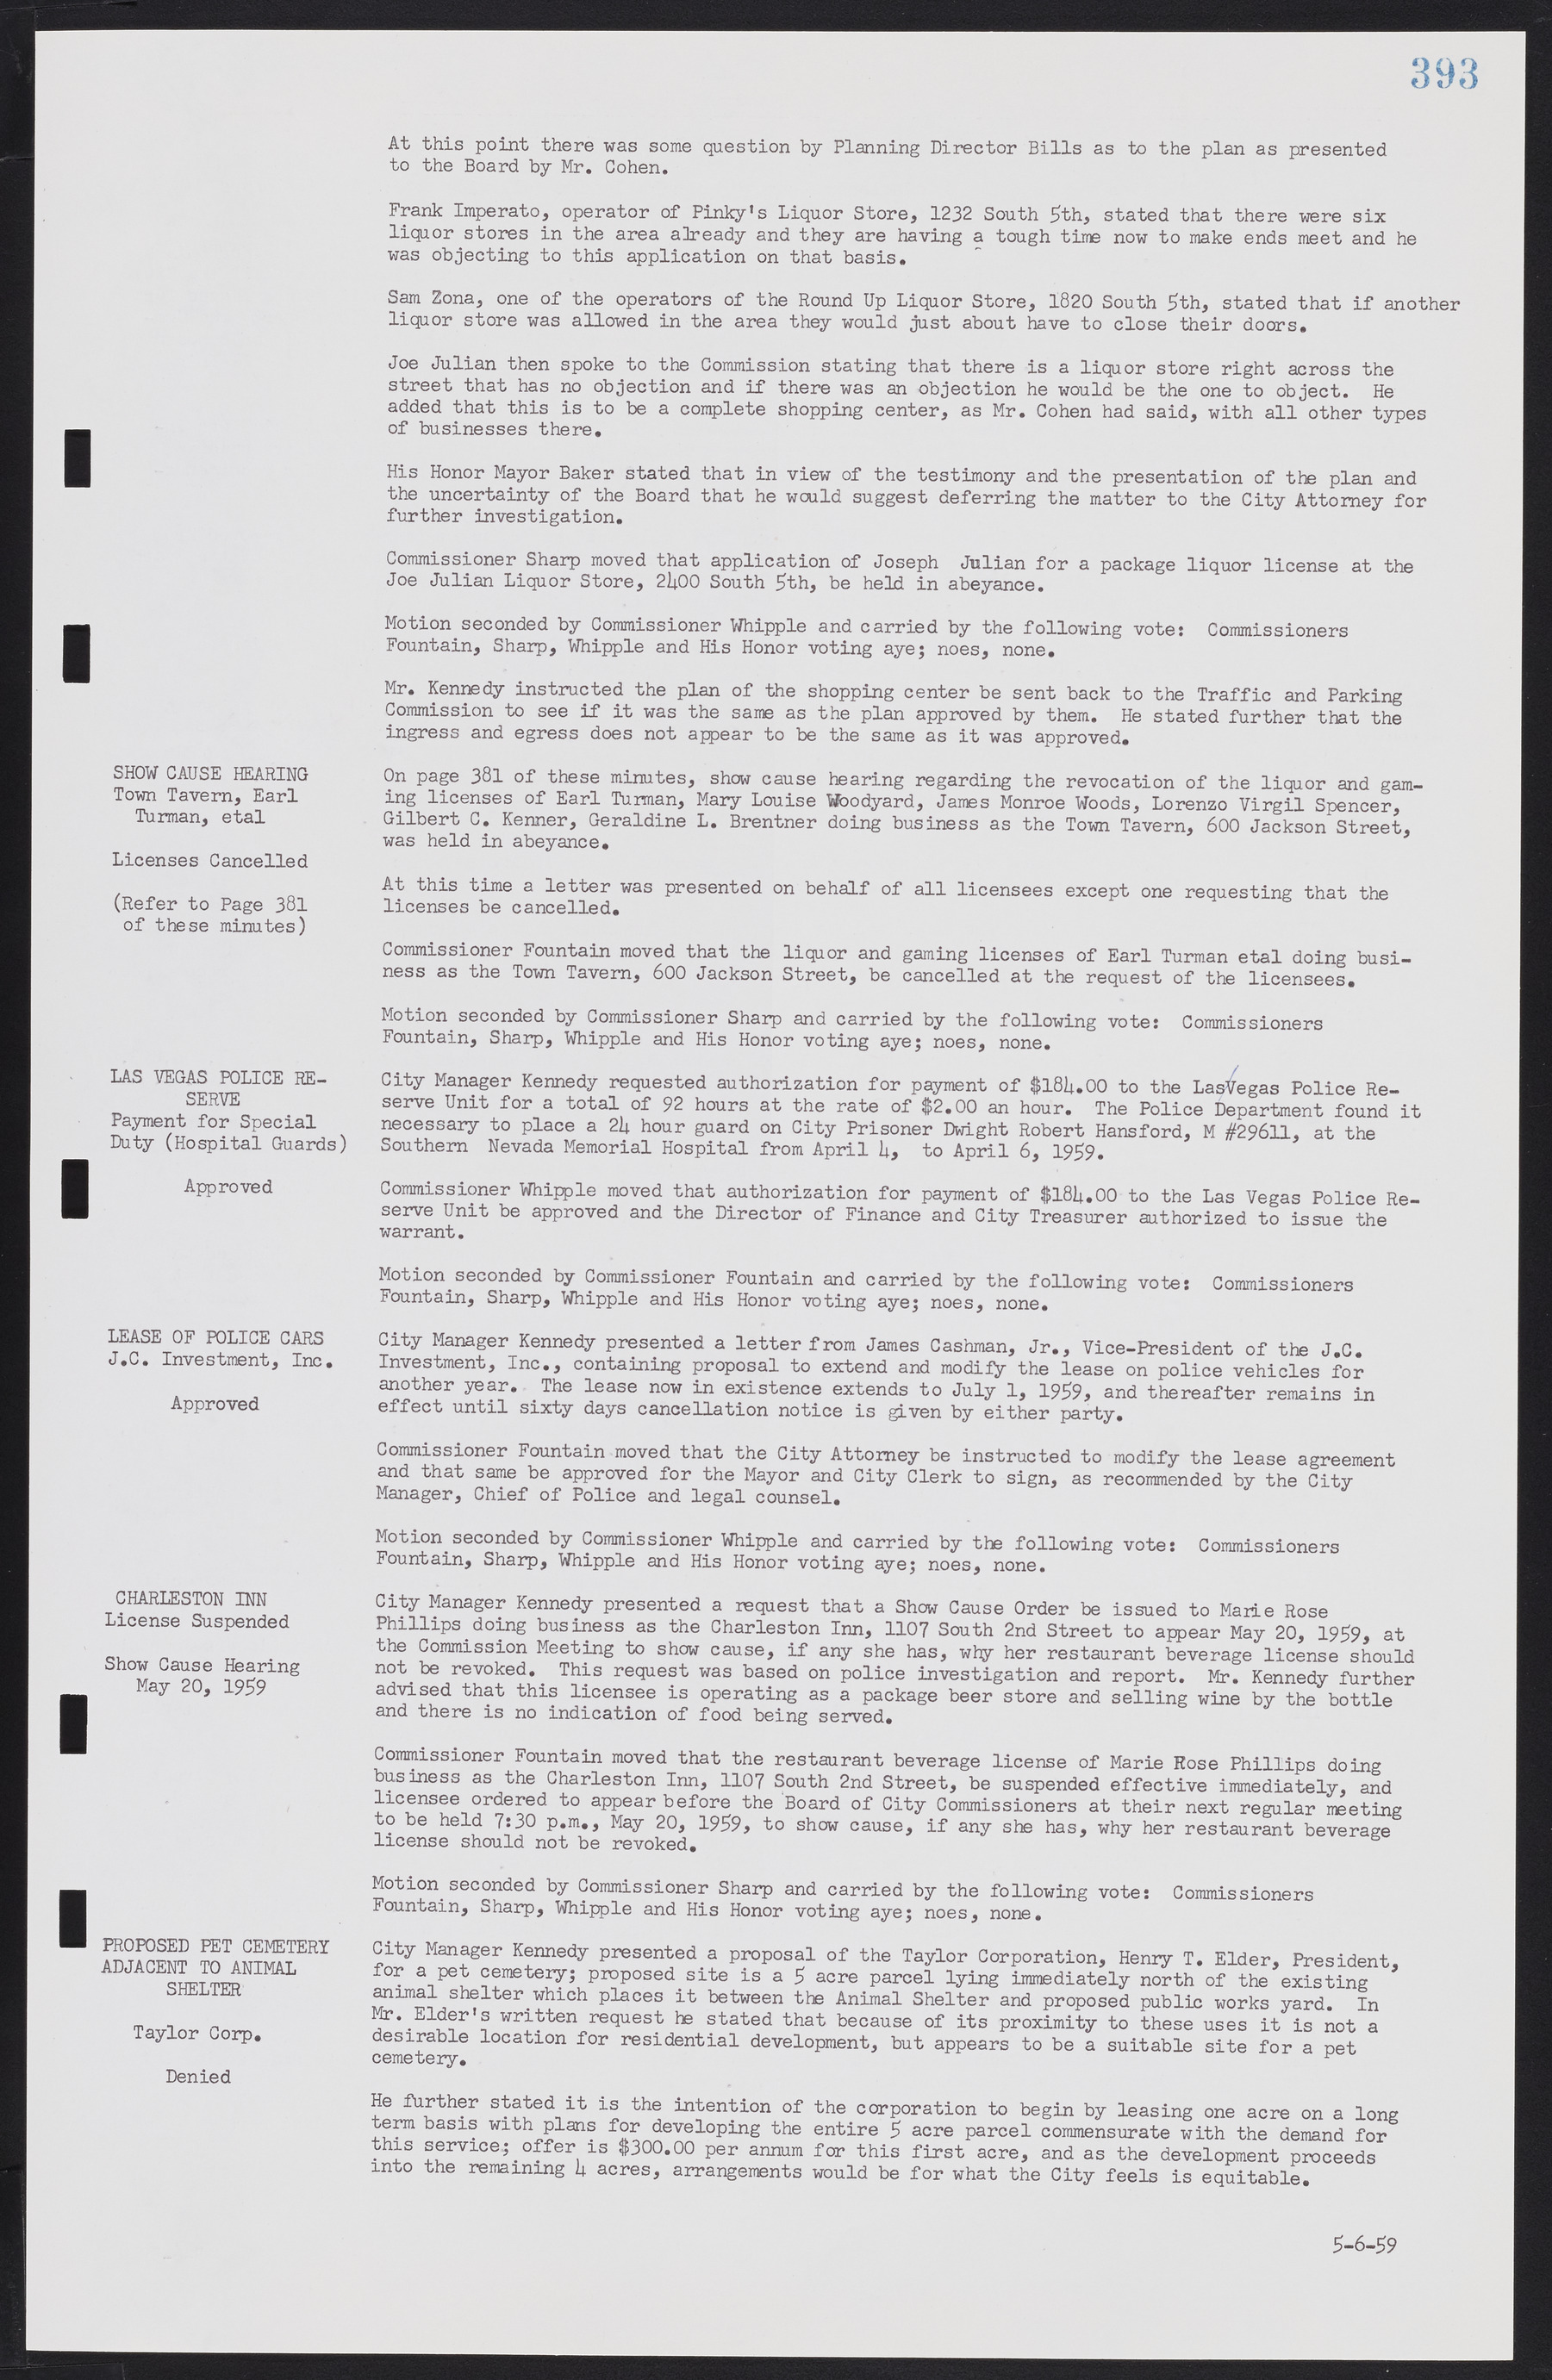 Las Vegas City Commission Minutes, November 20, 1957 to December 2, 1959, lvc000011-429